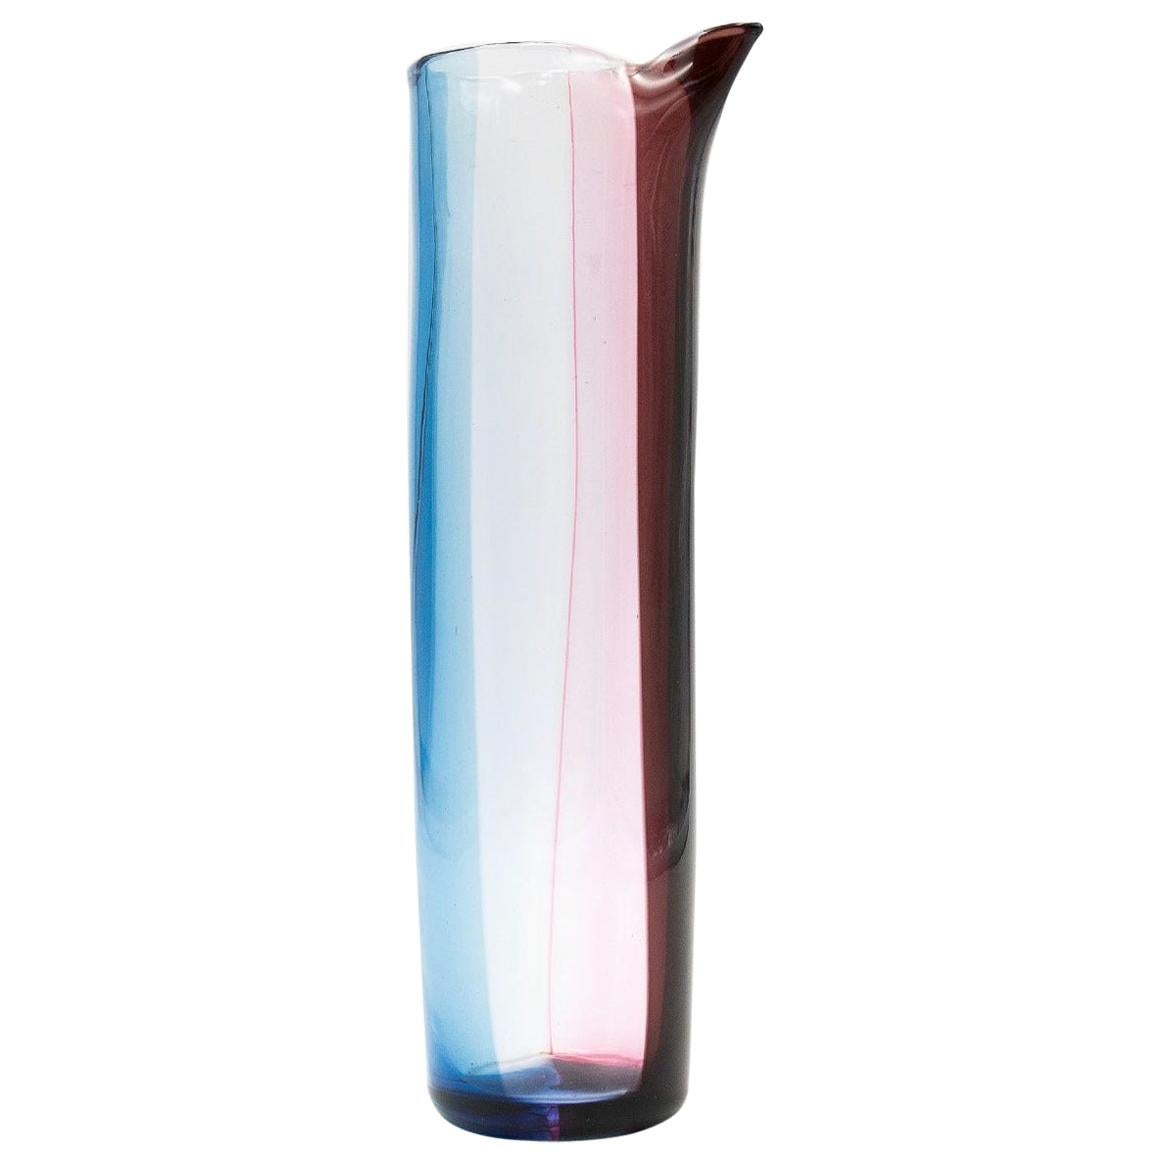 Venini Murano Vignelli / Bianconi Glass Vase Pitcher, Nice Color Scheme